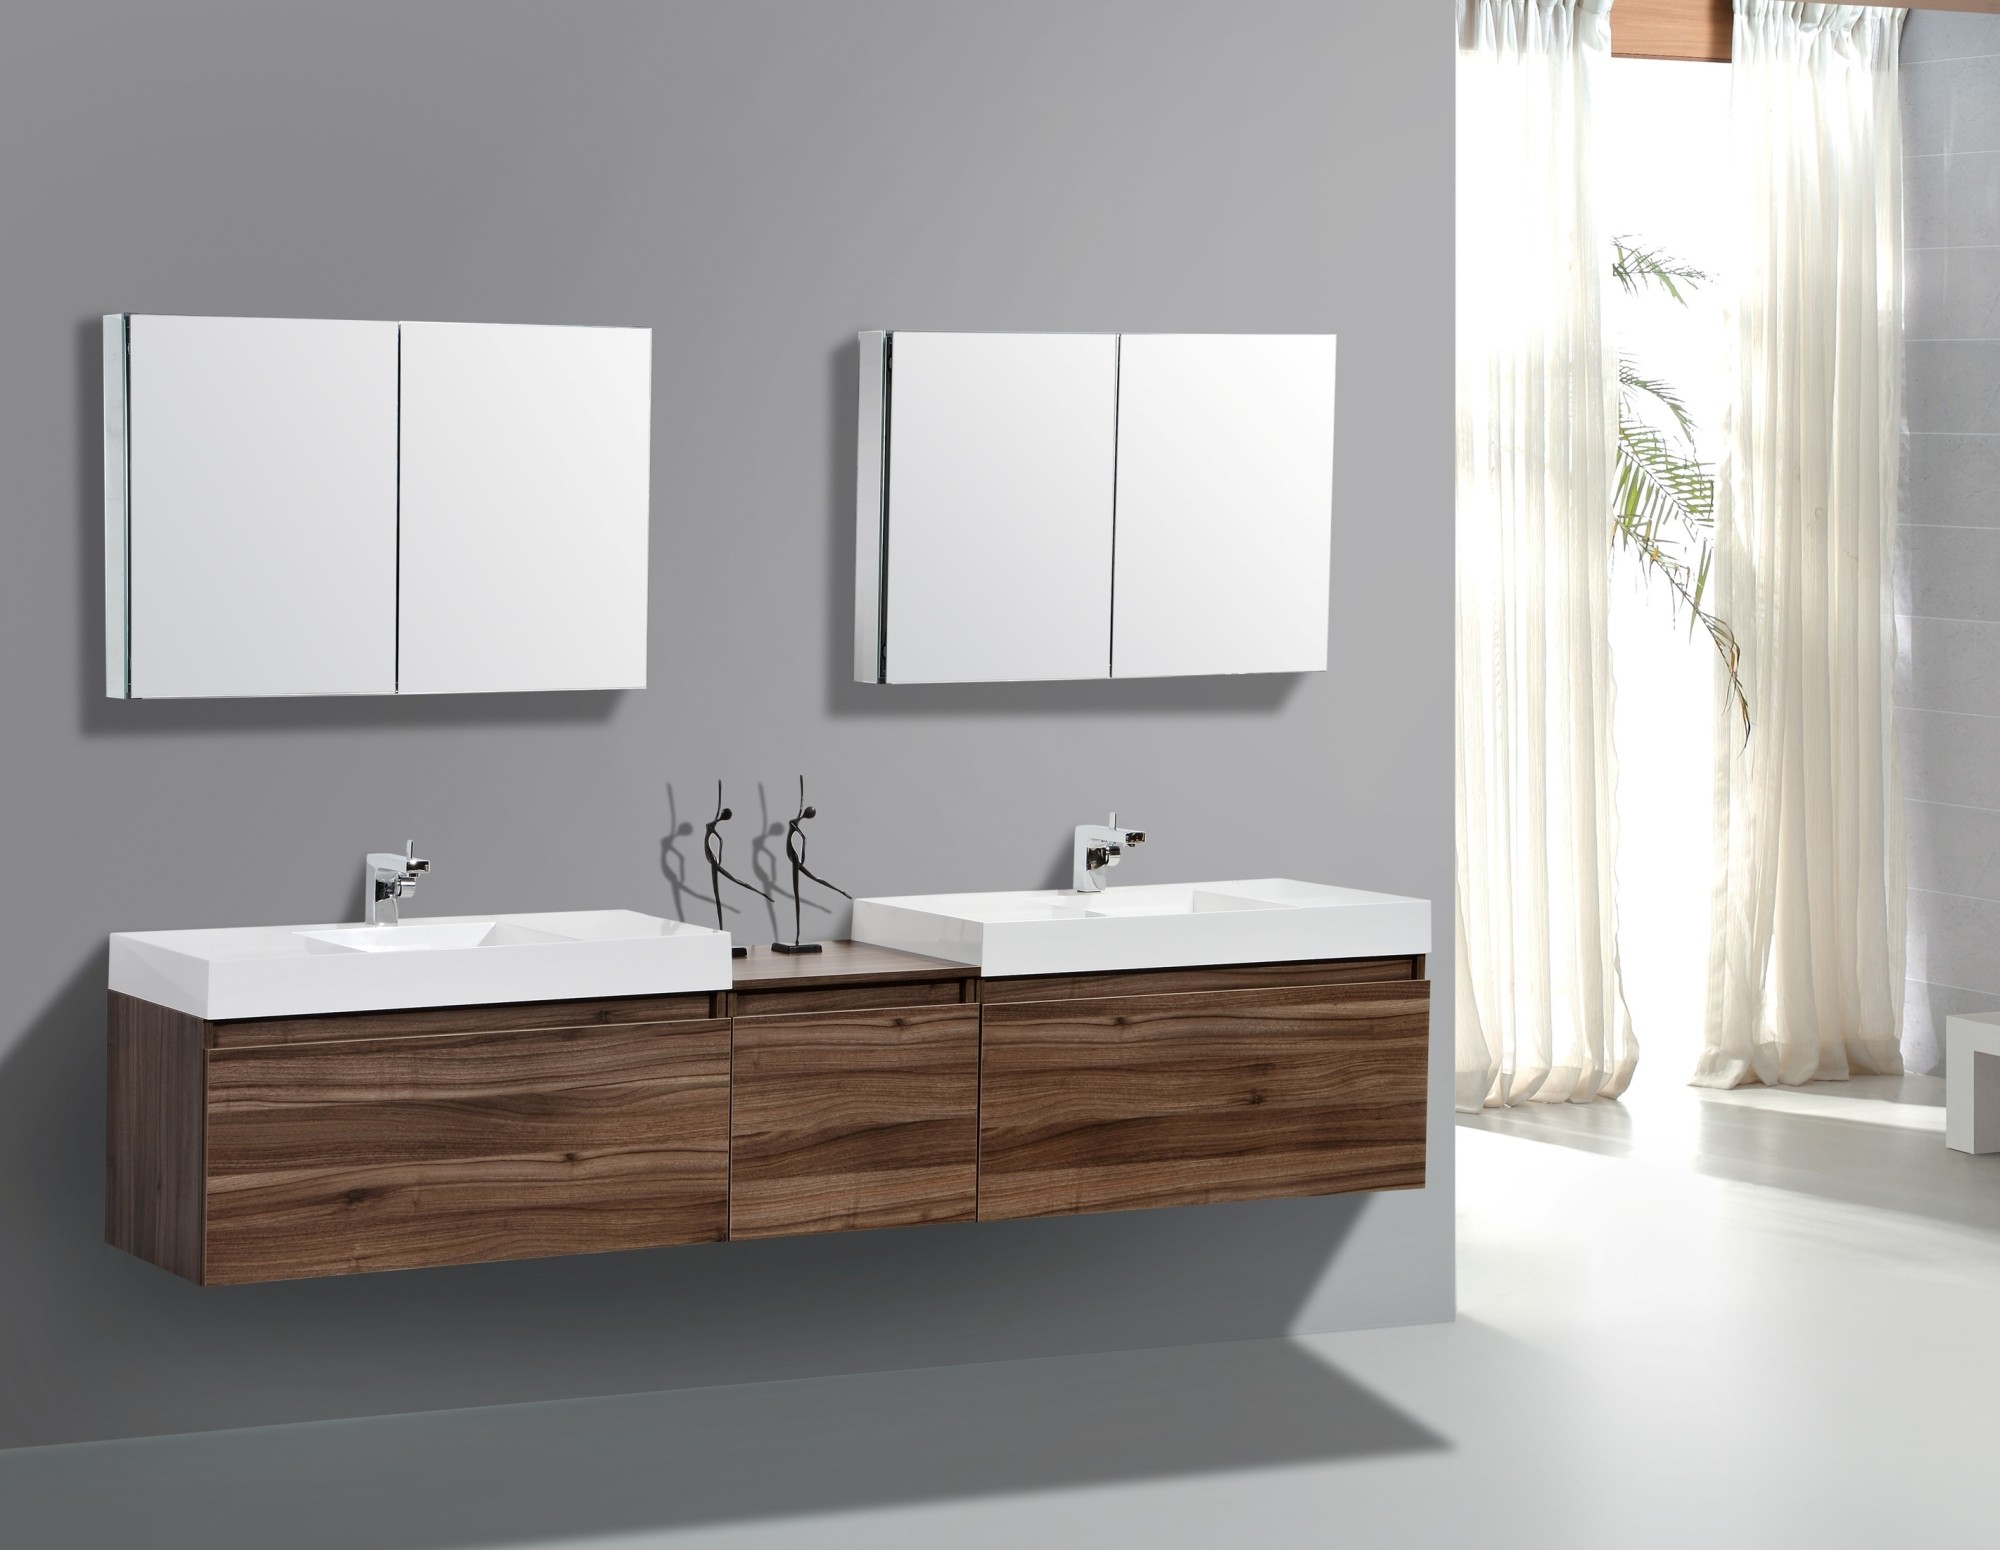 Bathroom Vanities From Modern Bathroom Vanities Design Made From Wooden Material Using Twin Washbasin Design Ideas For Inspiration Bathroom Modern Bathroom Vanities As Amusing Interior For Futuristic Home